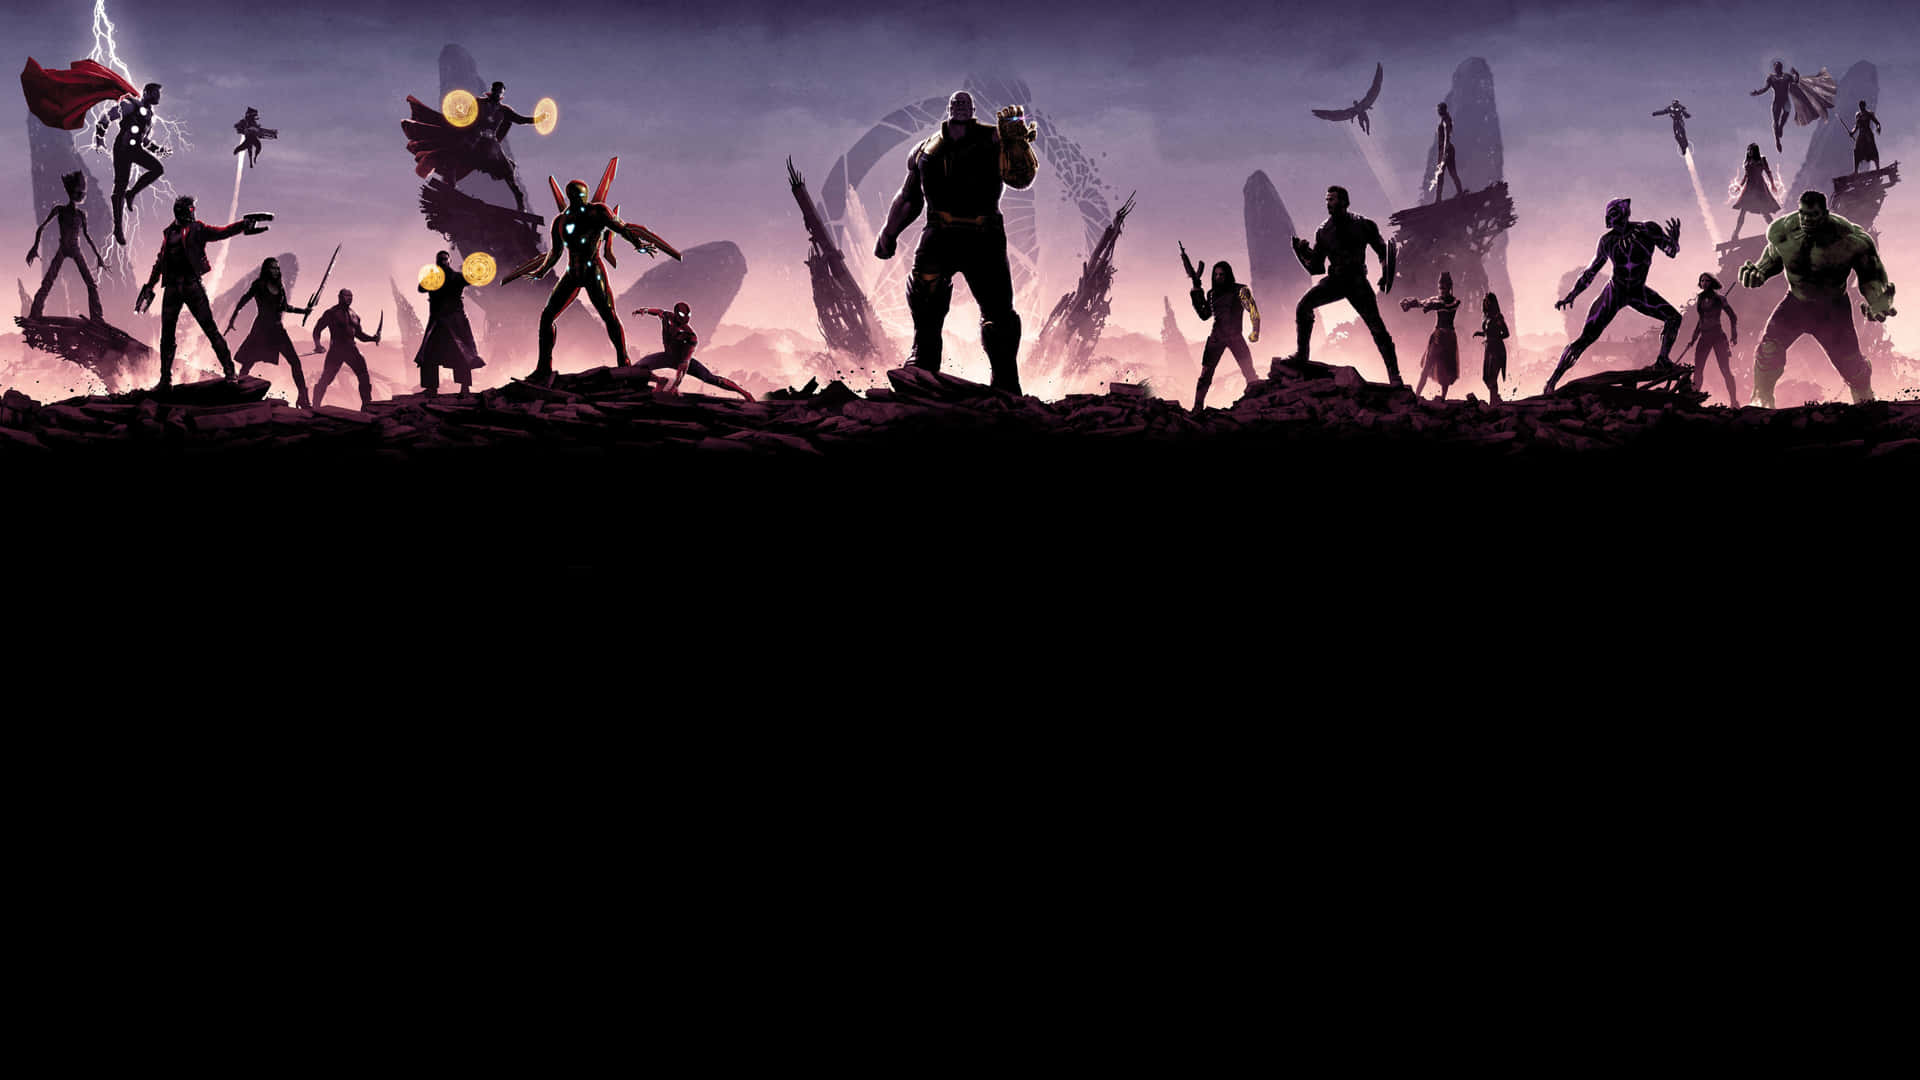 Earth's Mightiest Heroes Unite in Marvel's Infinity War Wallpaper